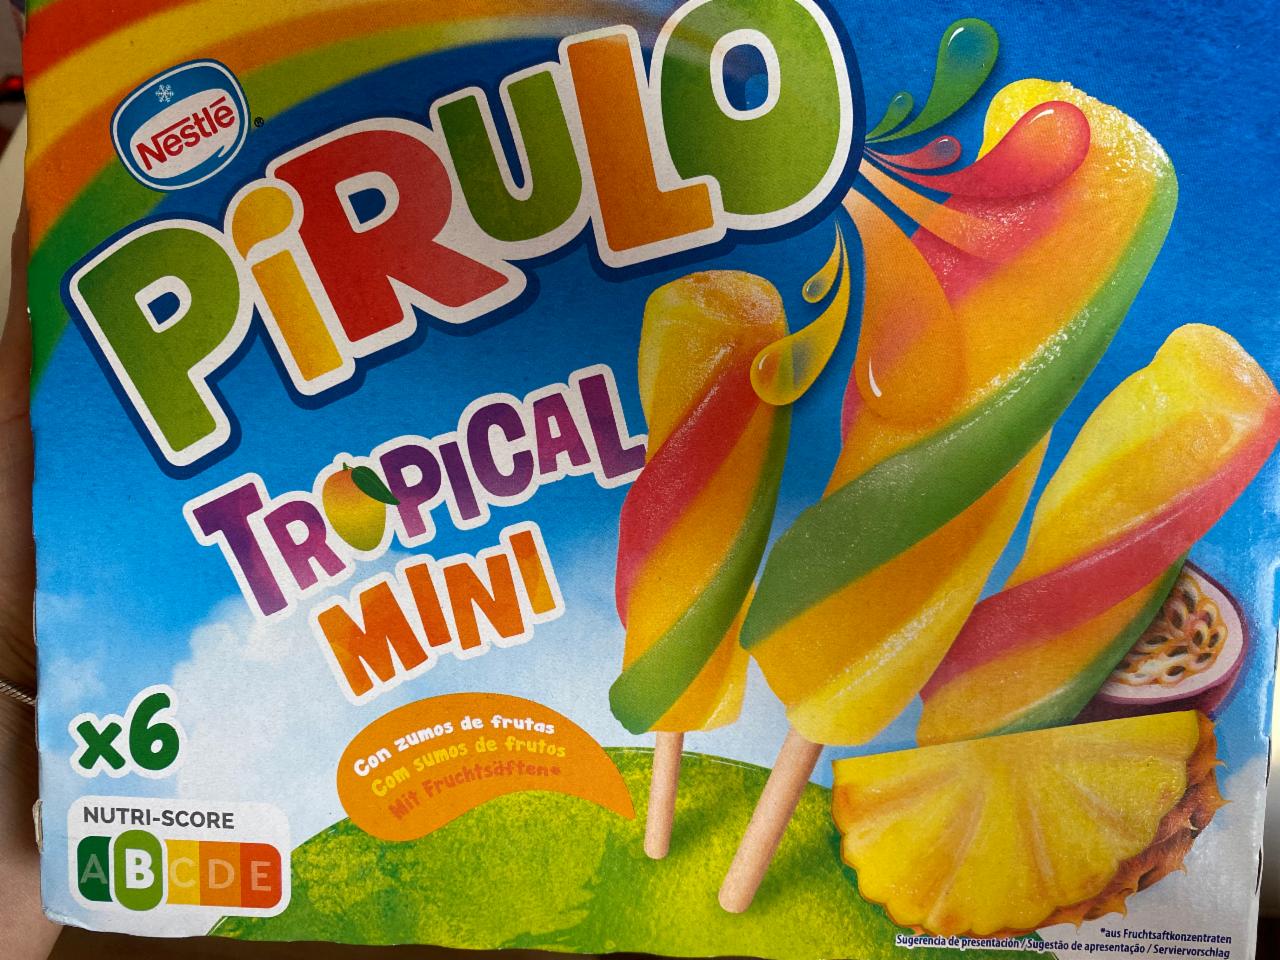 Fotografie - pirulo tropical mini Nestlé